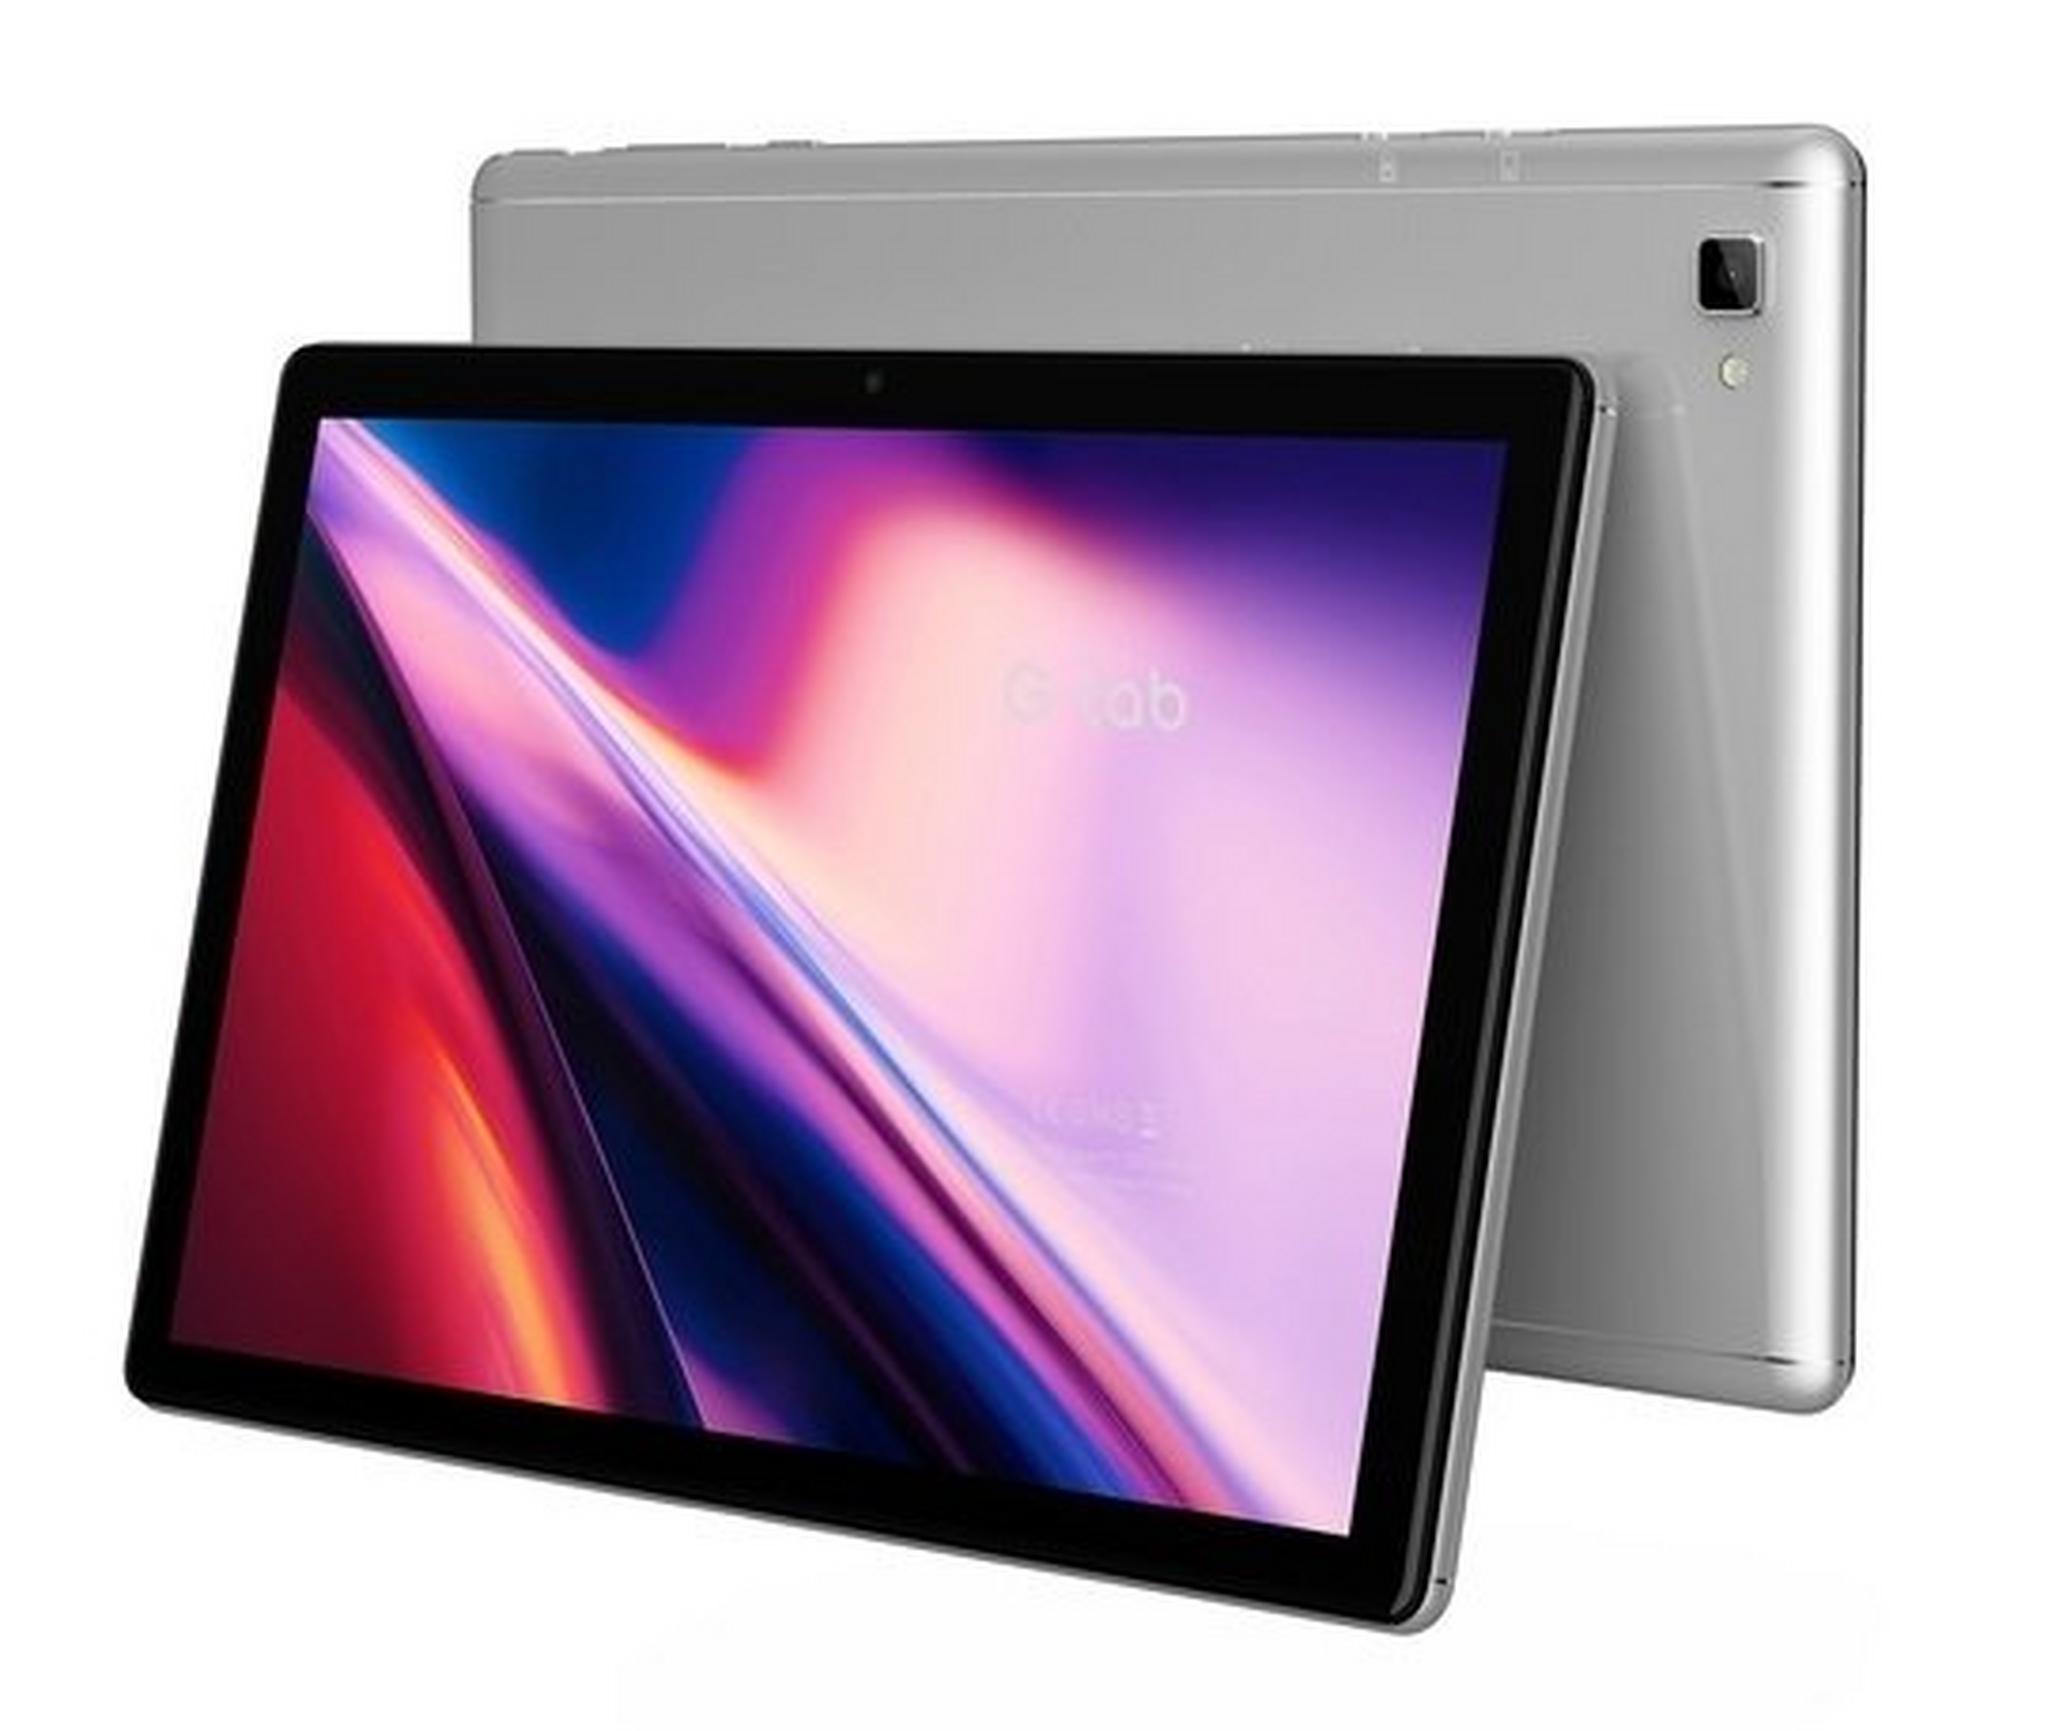 G-Tab S20 32GB 4G 10.1" Tablet - Silver